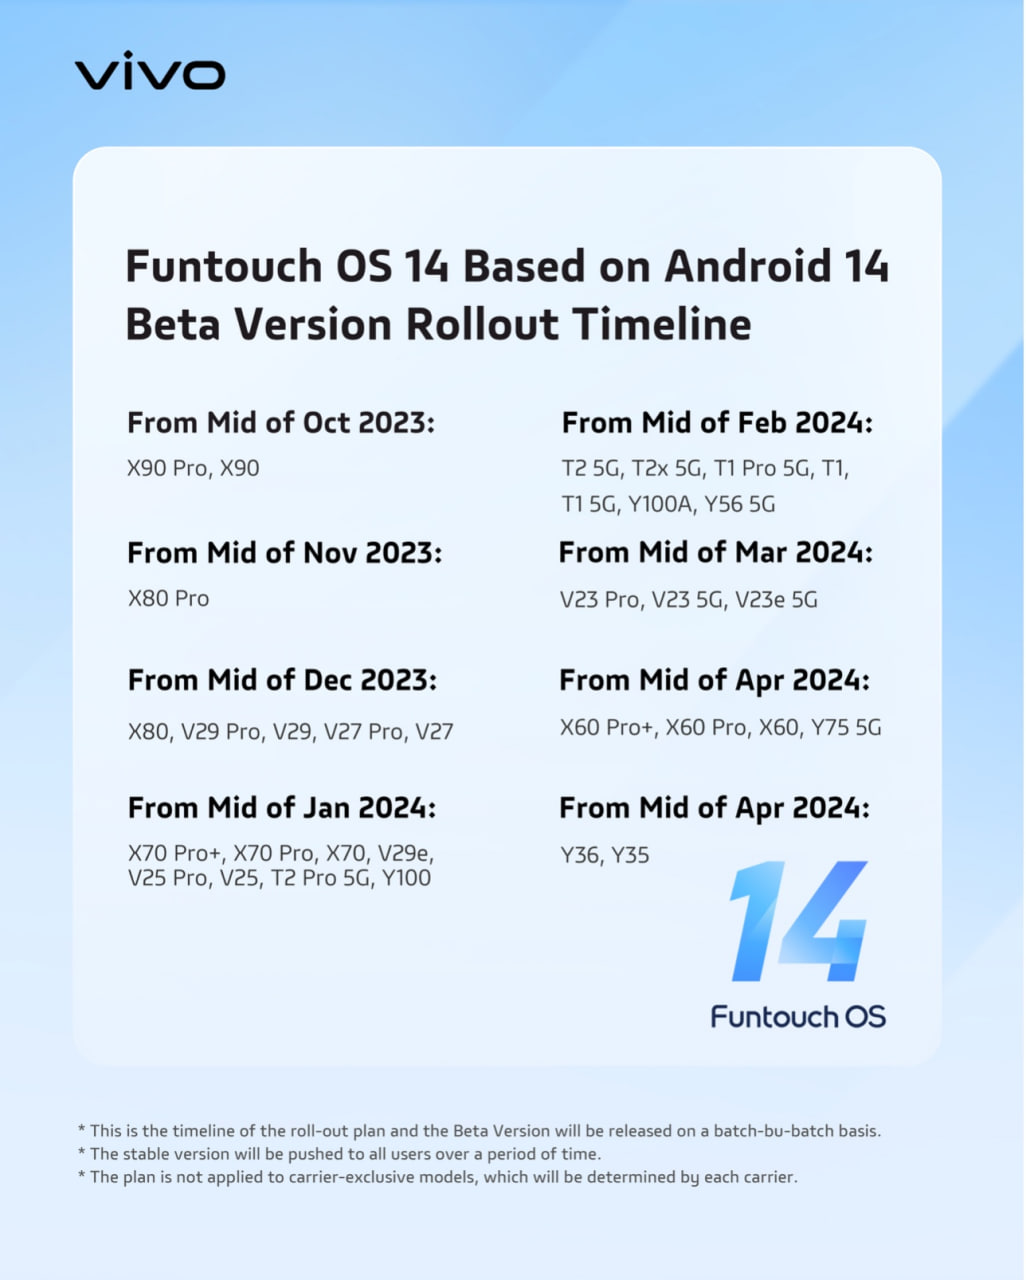 Vivo Funtouch OS 14 beta devices